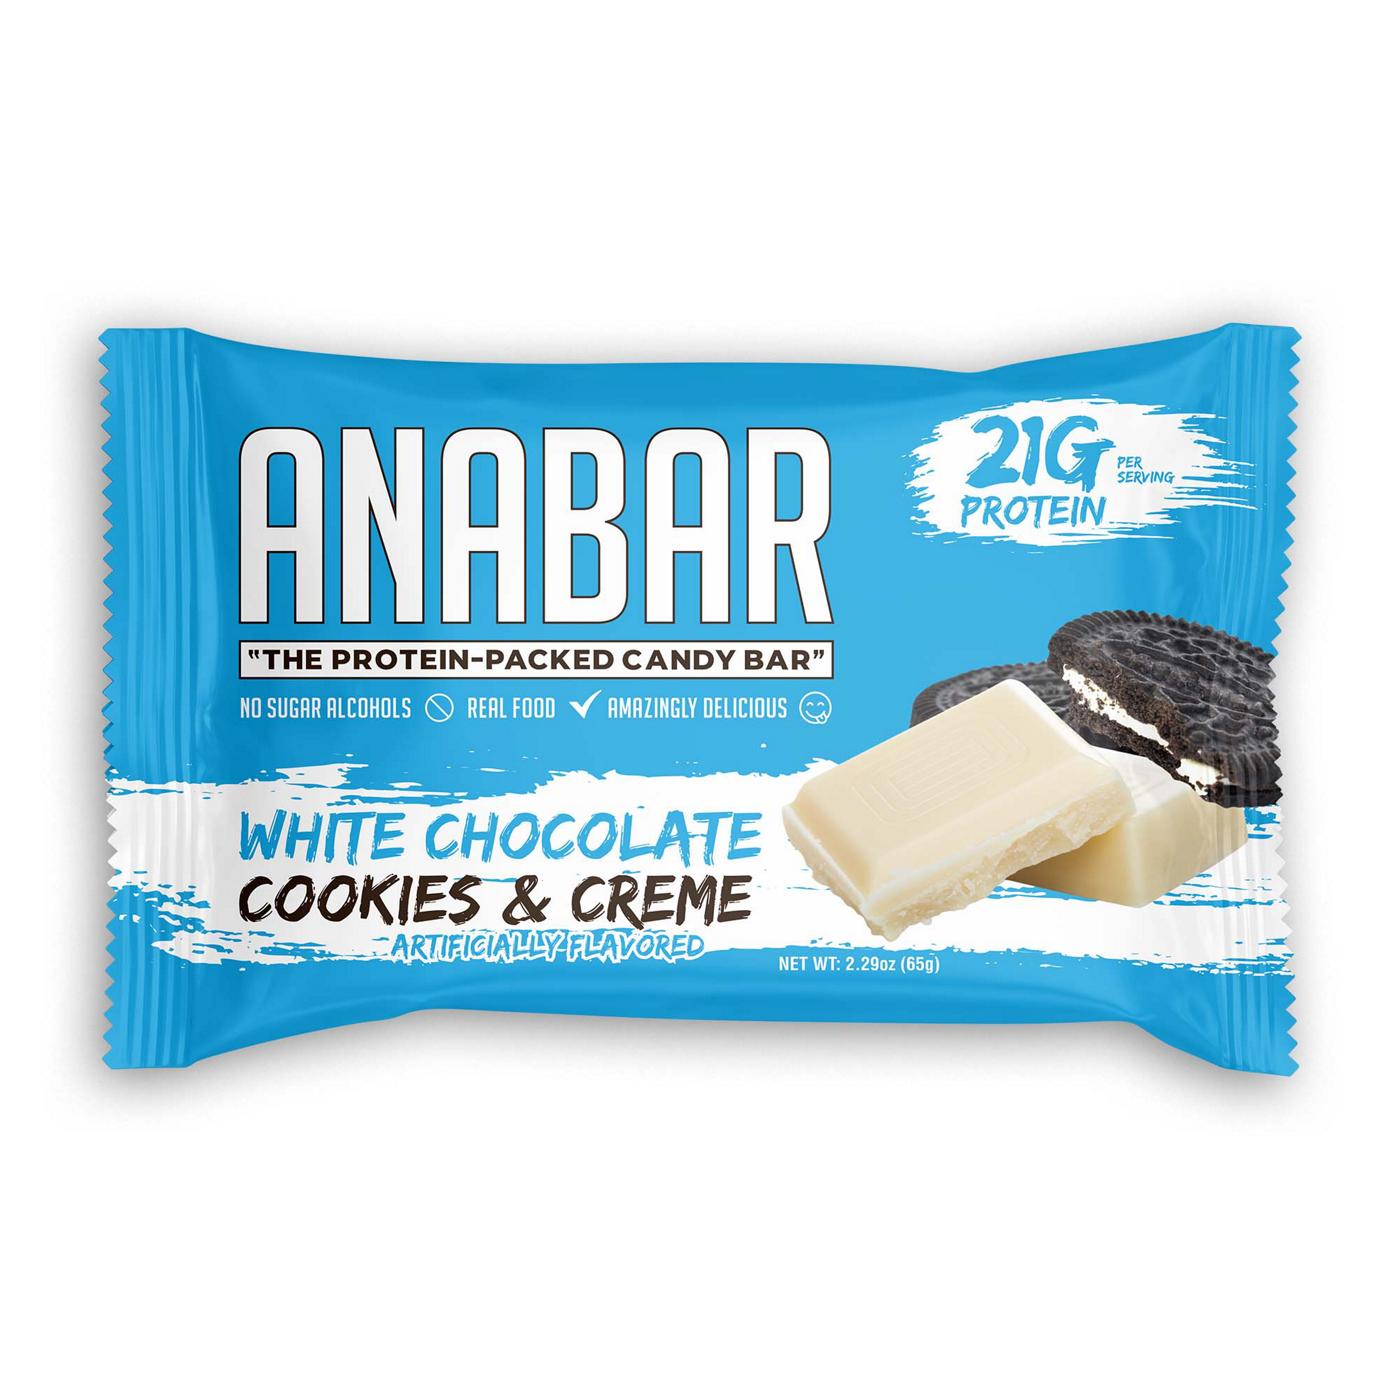 Anabar 21g Protein Performance Bar - White Chocolate Cookies & Cream; image 1 of 2